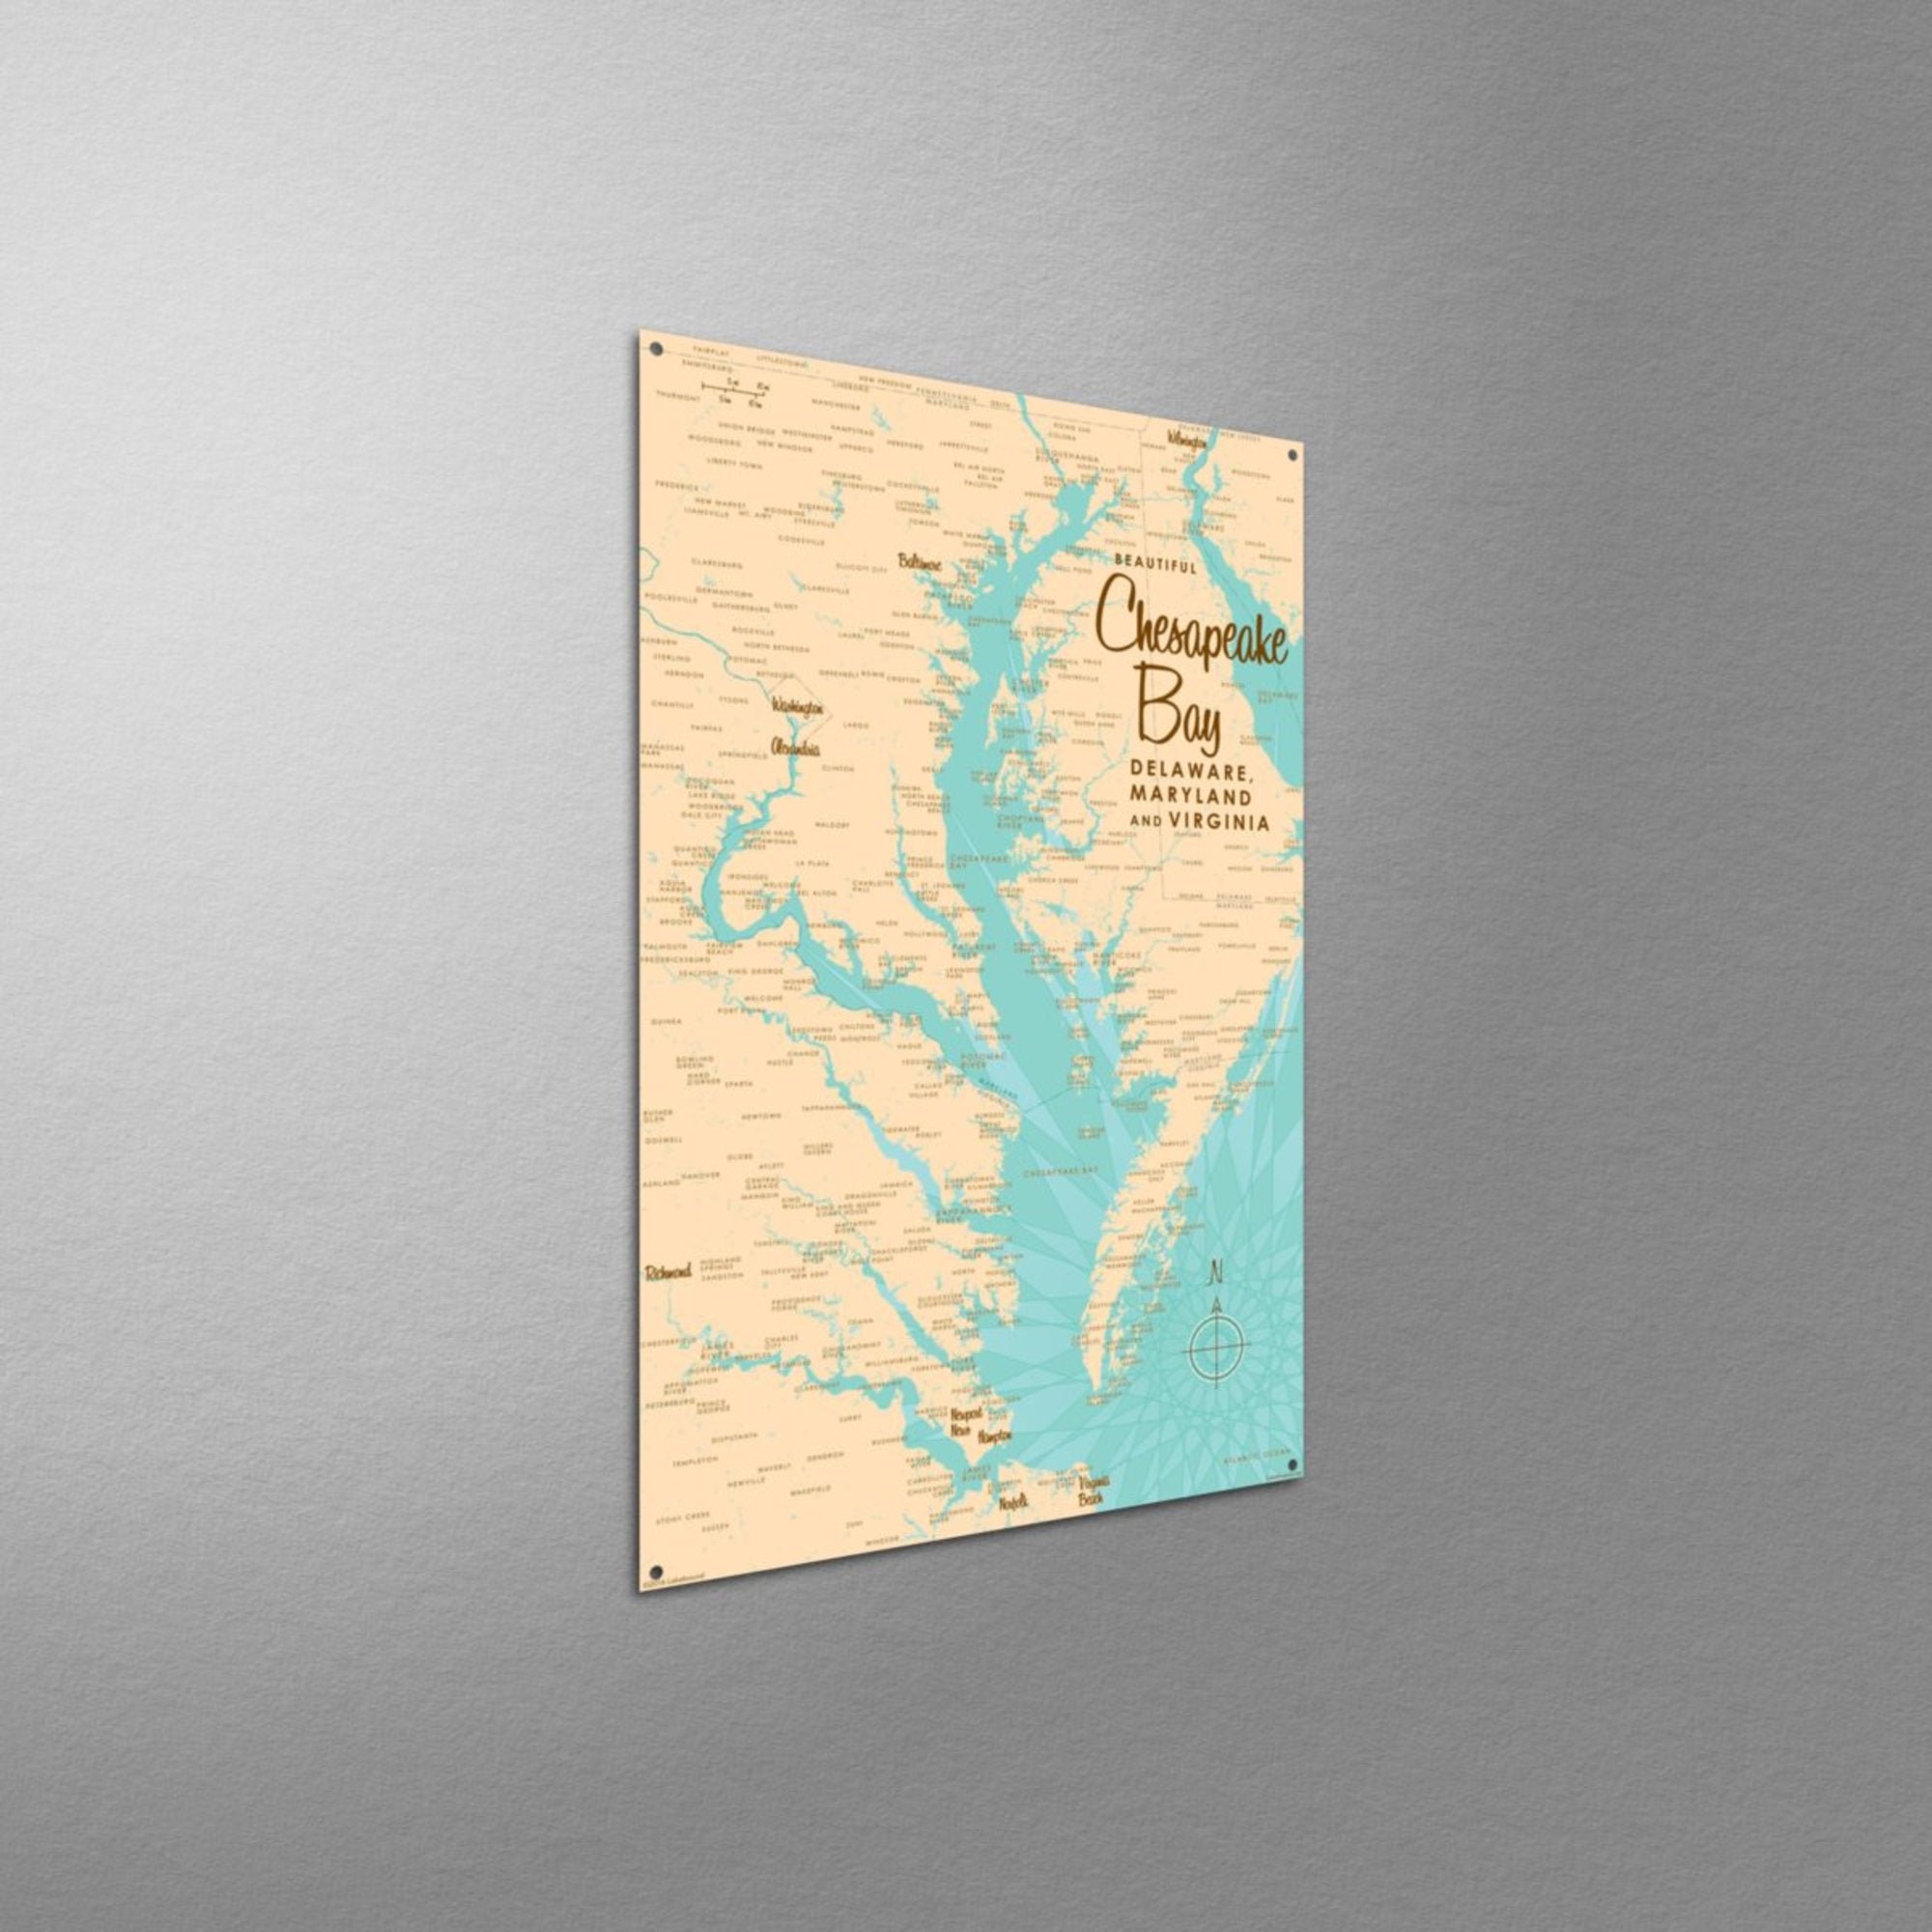 Chesapeake Bay Maryland Virginia, Metal Sign Map Art